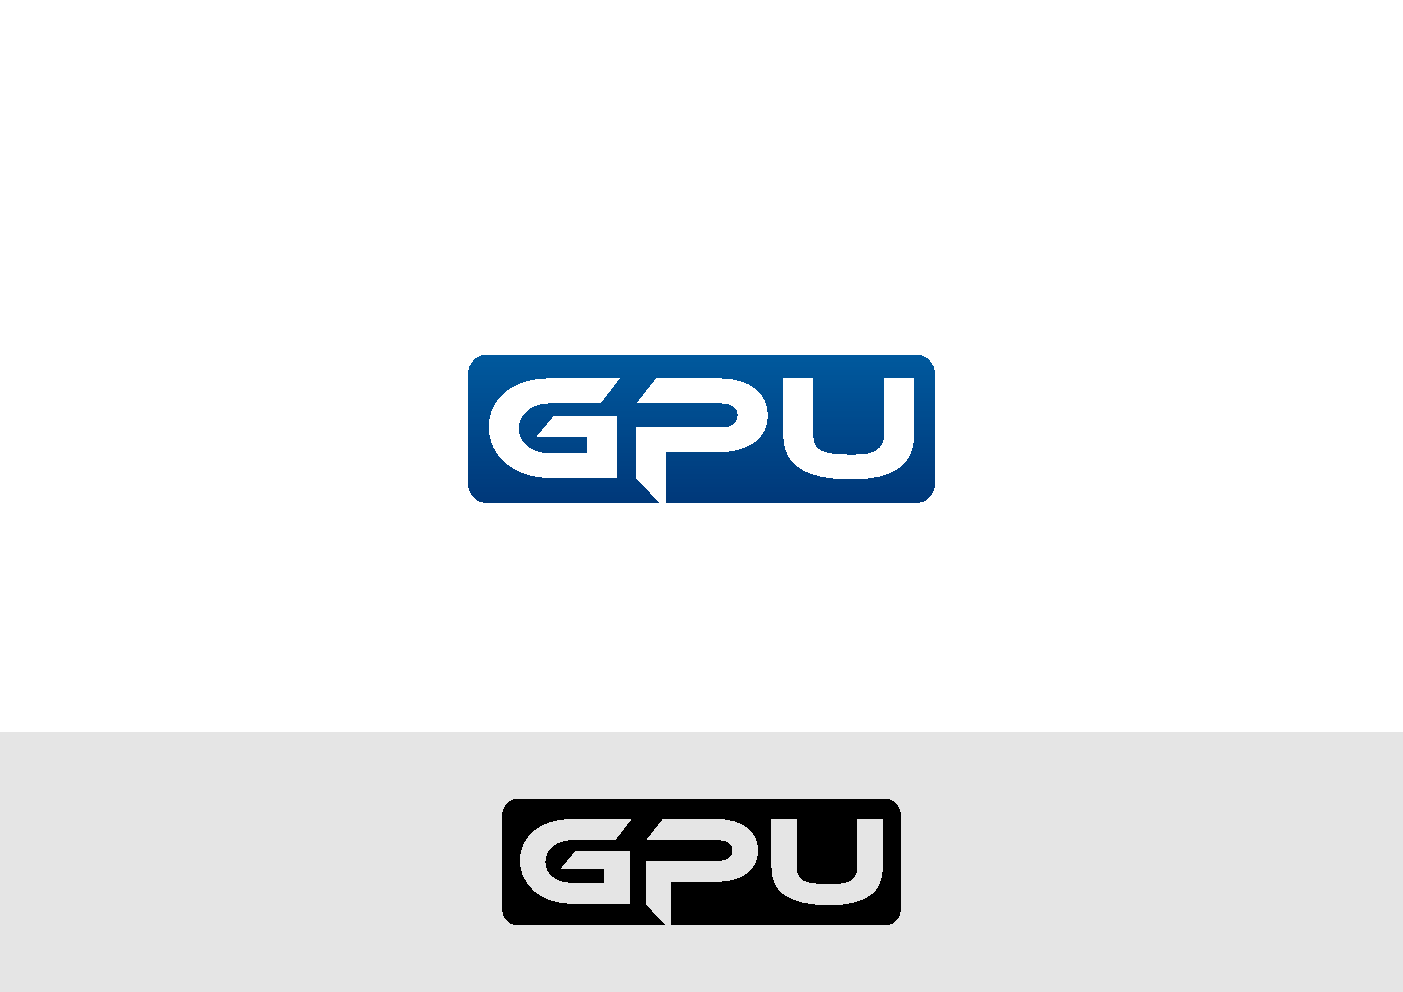 GPU Logo - Bold, Serious Logo Design for a Company by tarato. Design